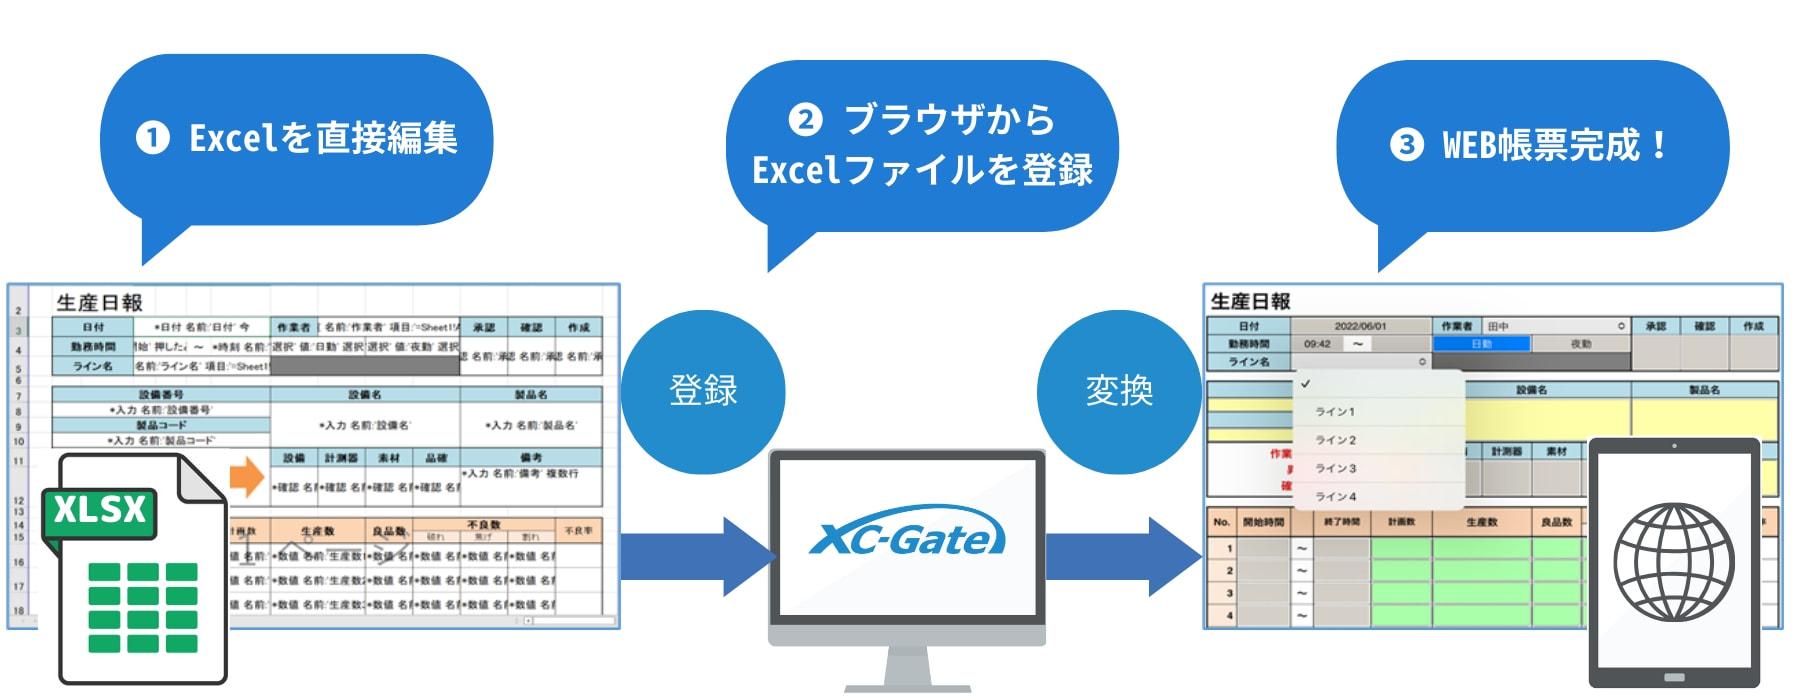 XC-Gate.V3の機能紹介 | XC-Gate.V3 | 製品ラインナップ | 電子帳票 ...